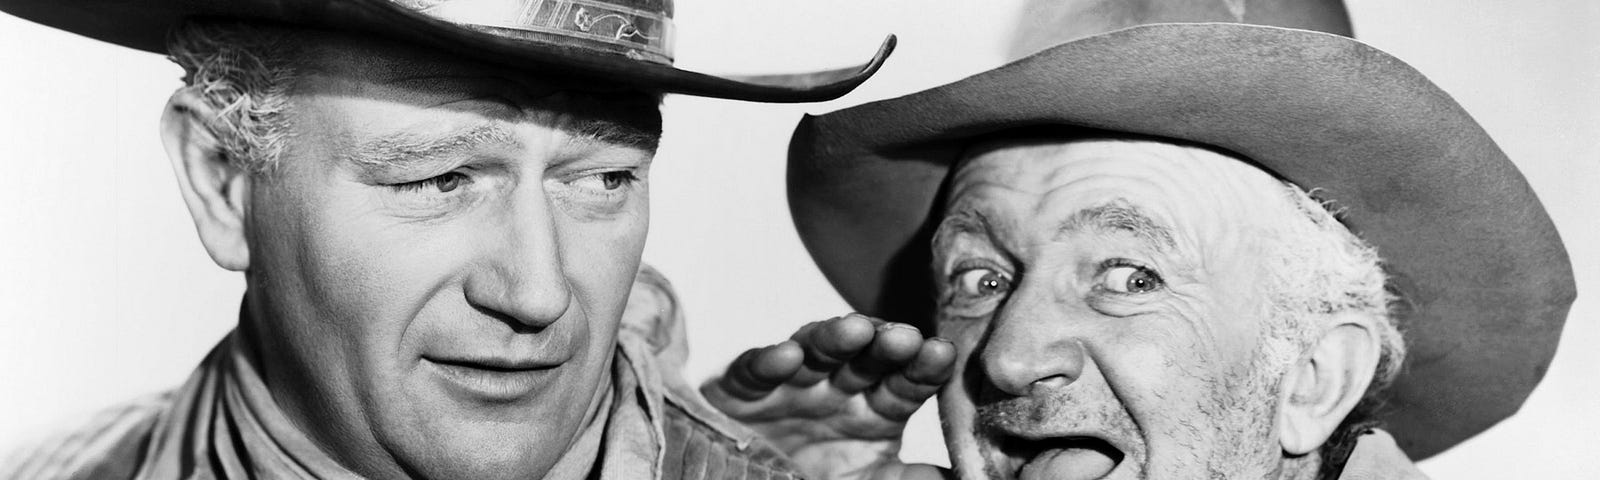 The actor John Wayne with Walter Brennan in costume, wearing cowbiys hats.